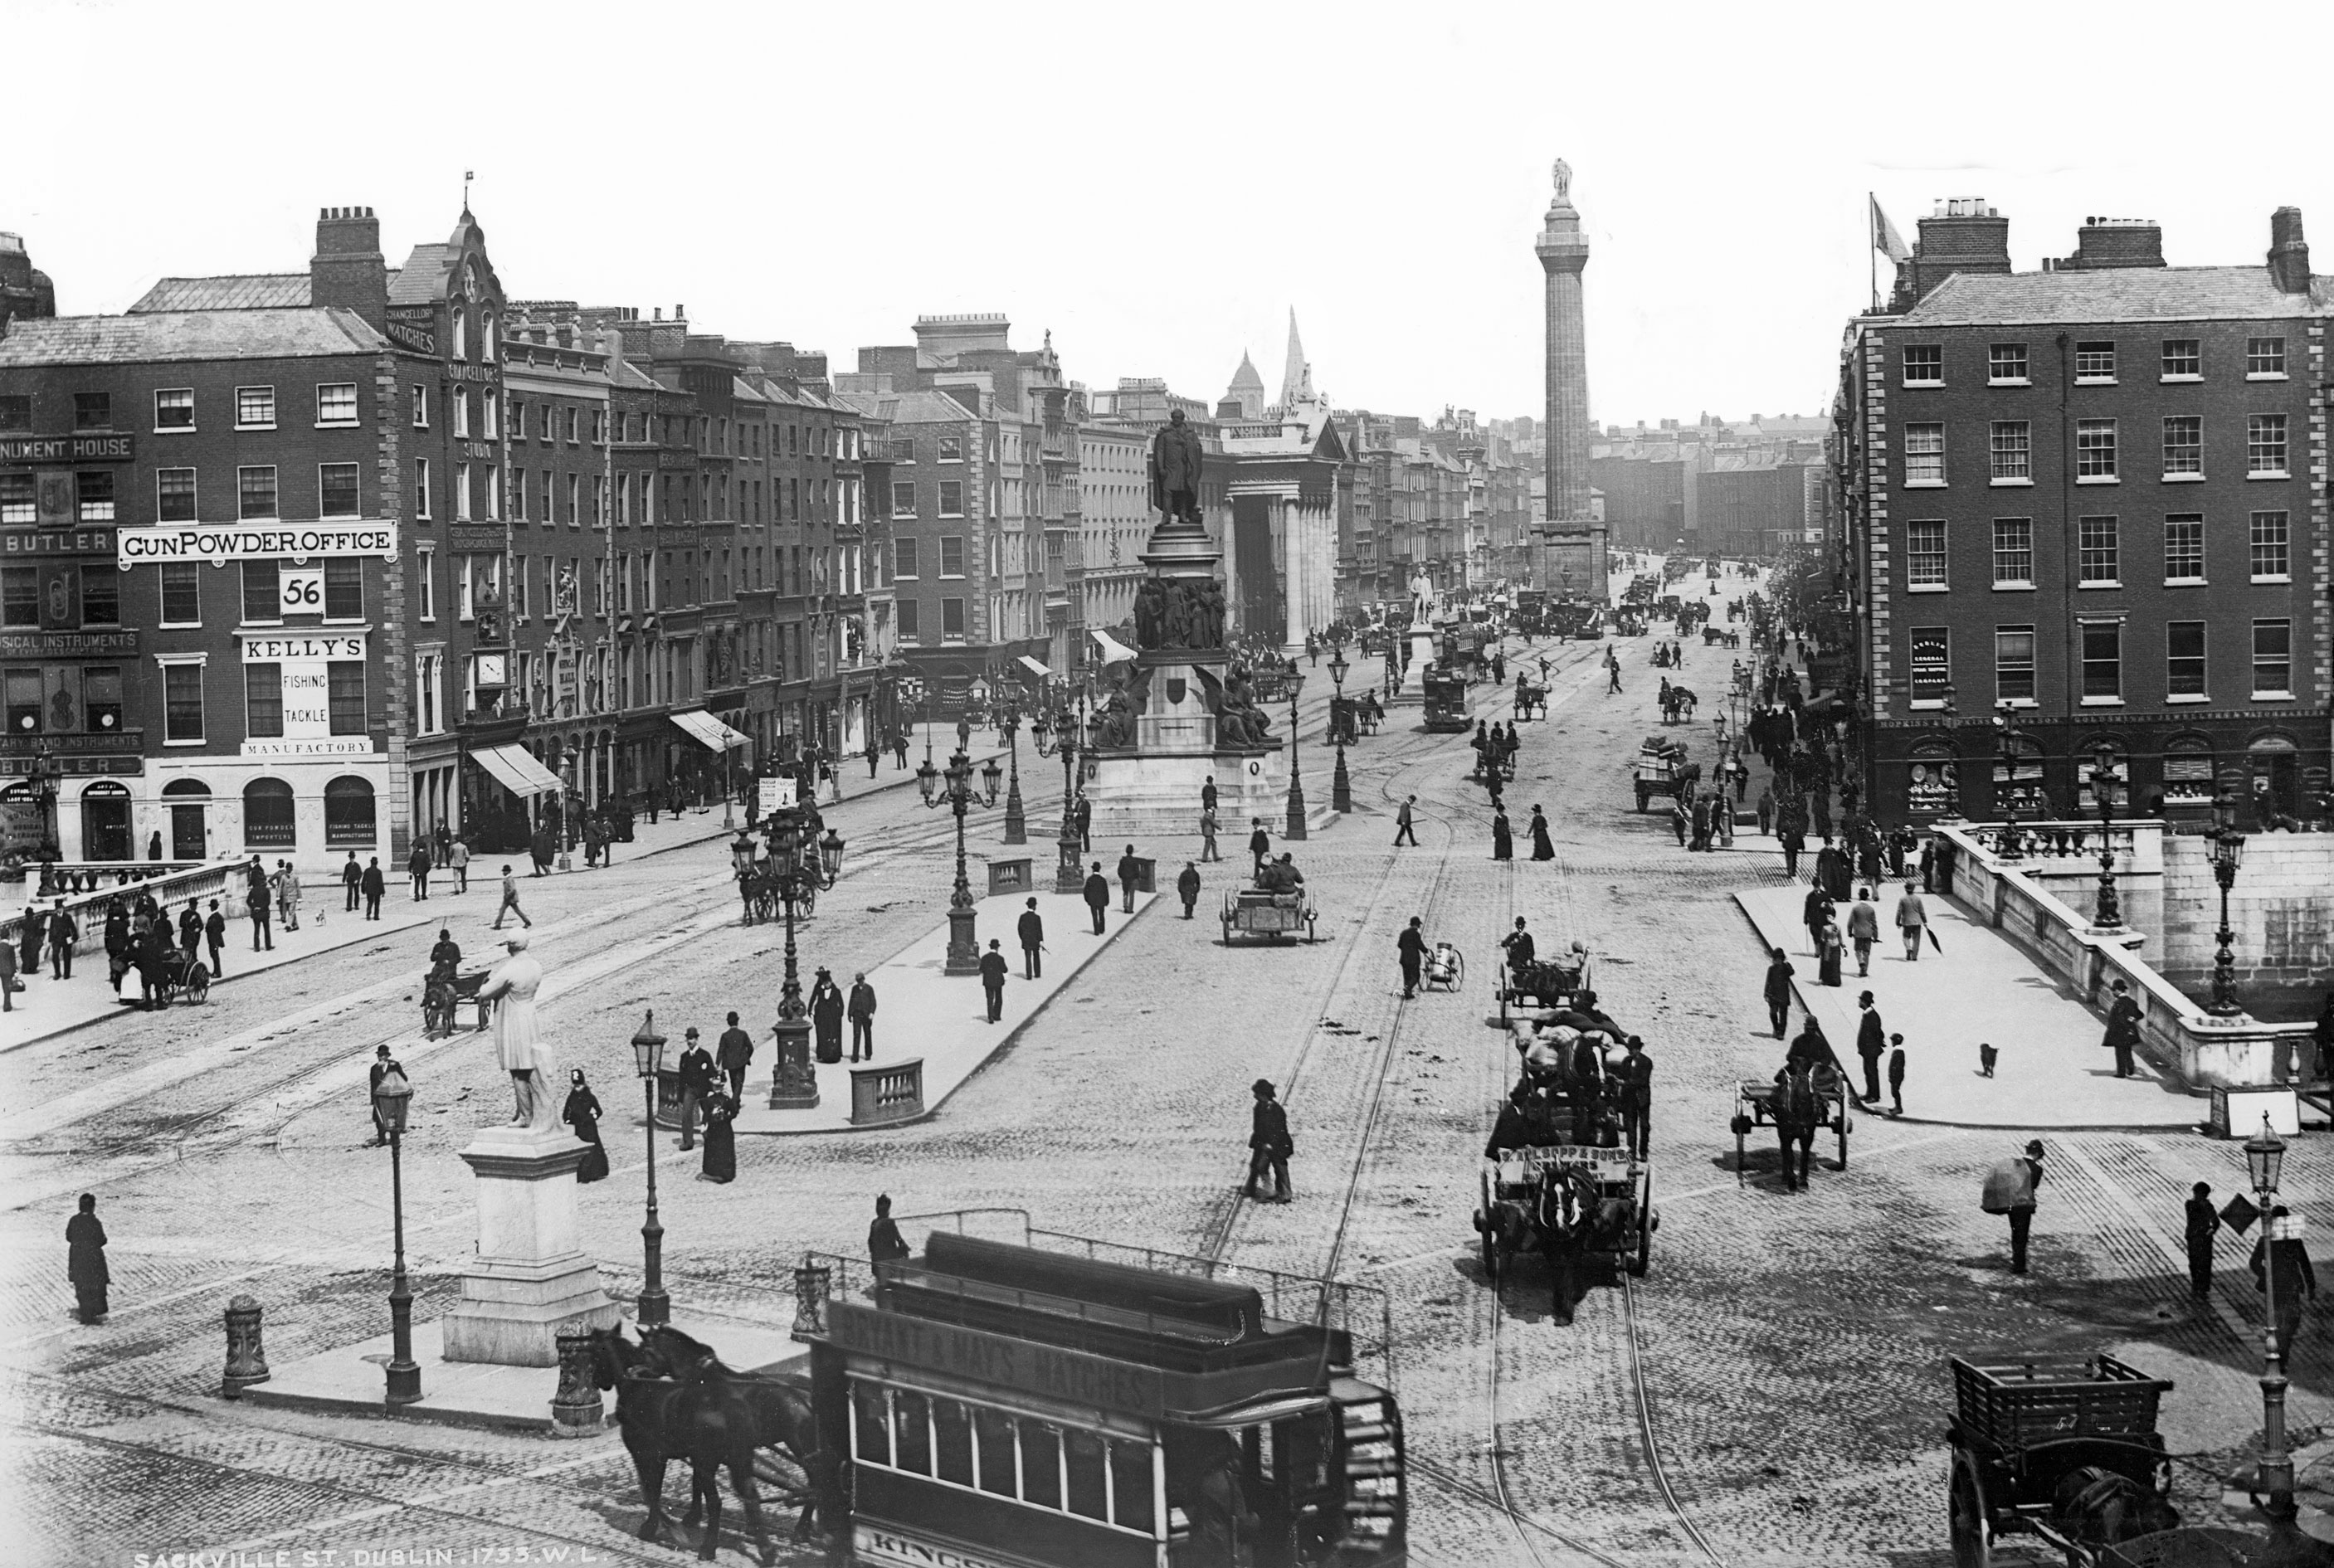 20 век фотографии улиц. Дублин Ирландия 19 век. Дублин 20 век. Дублин 1890 год. Ирландия города Дублин 19 век.